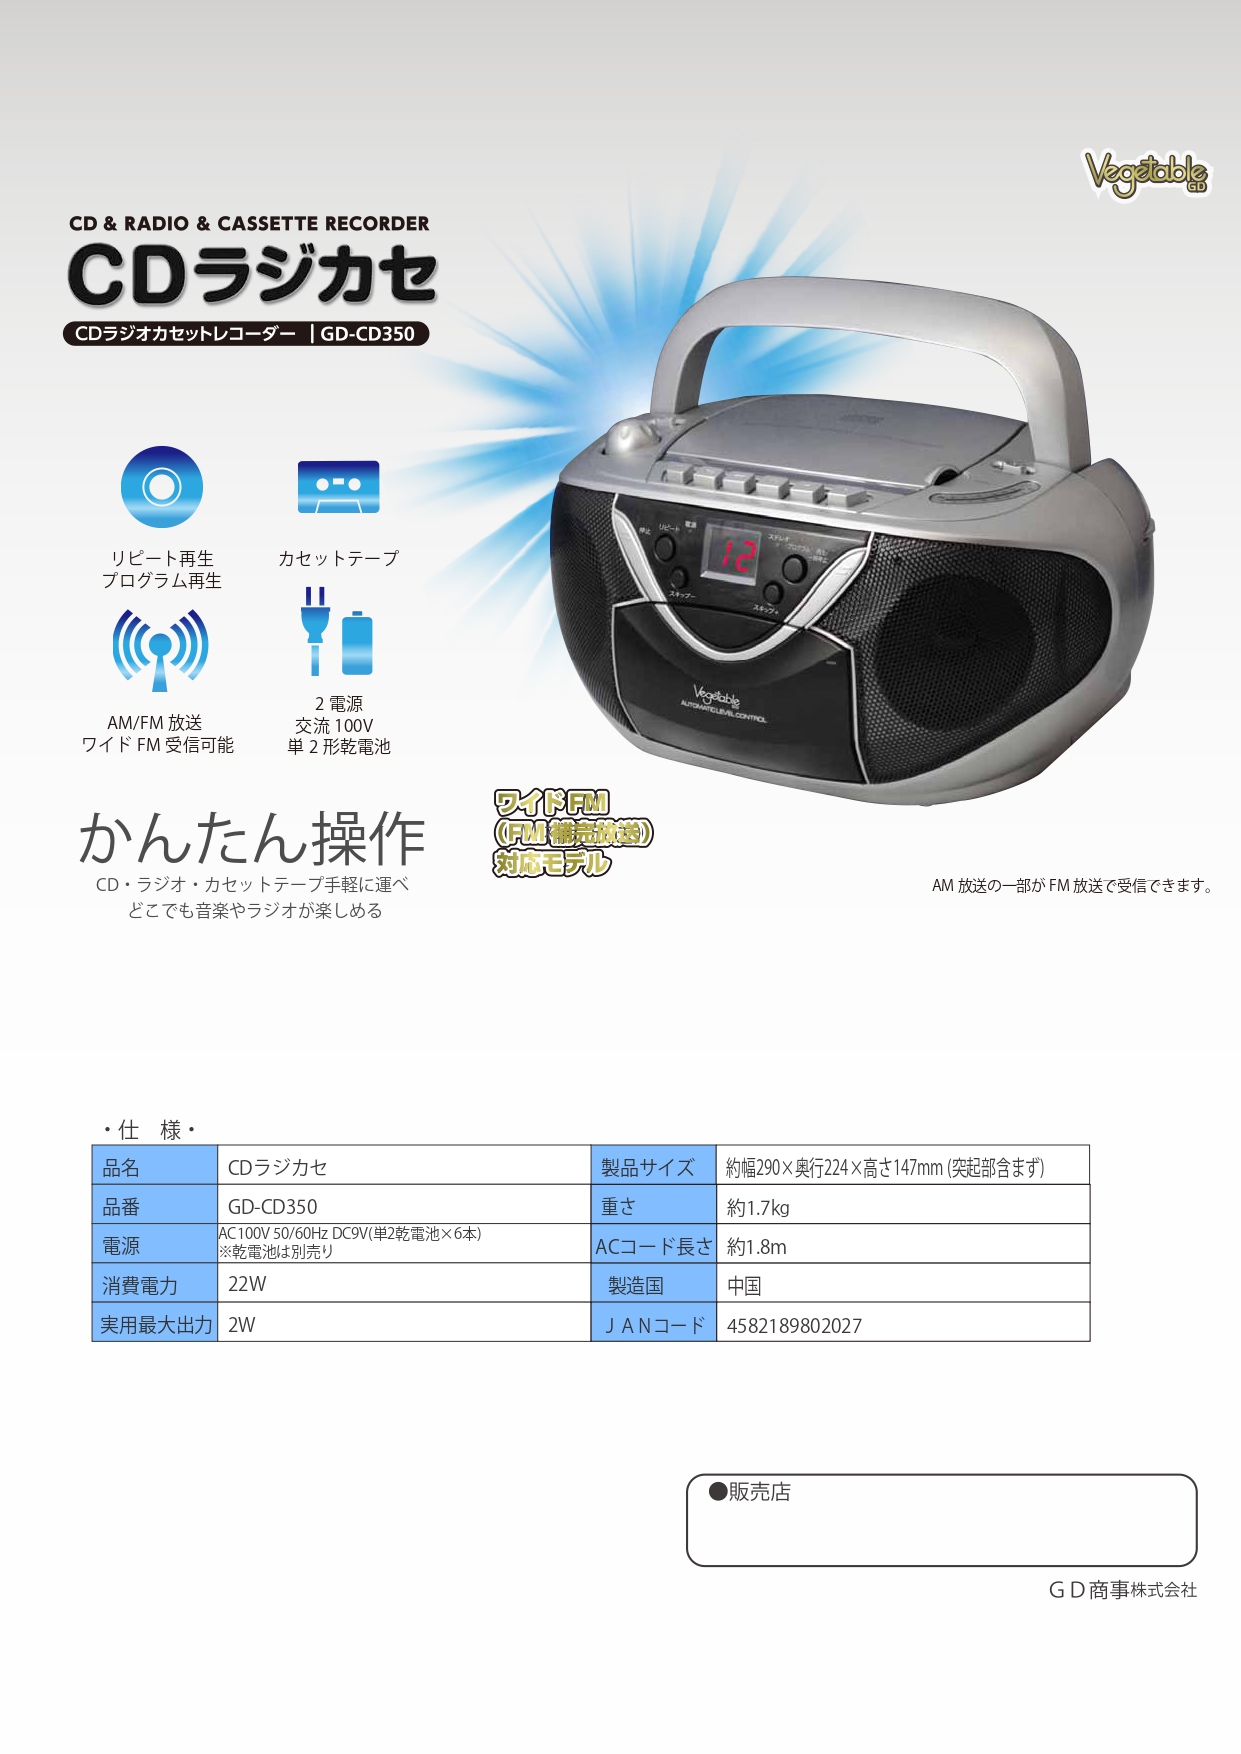 GD-CD350